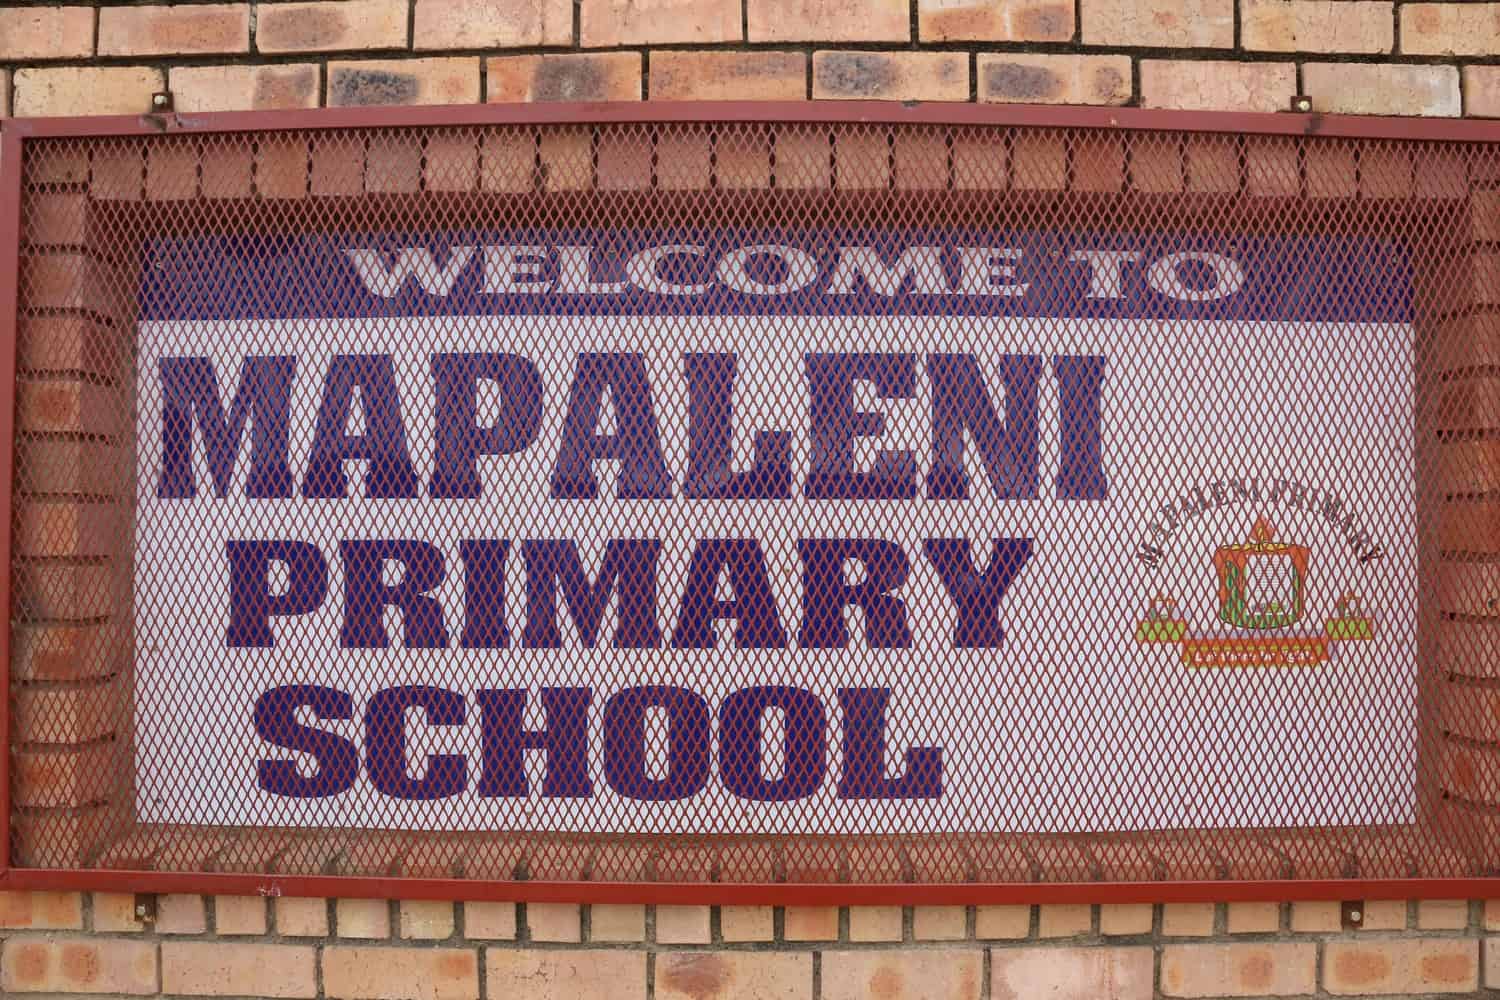 Mapaleni Primary School